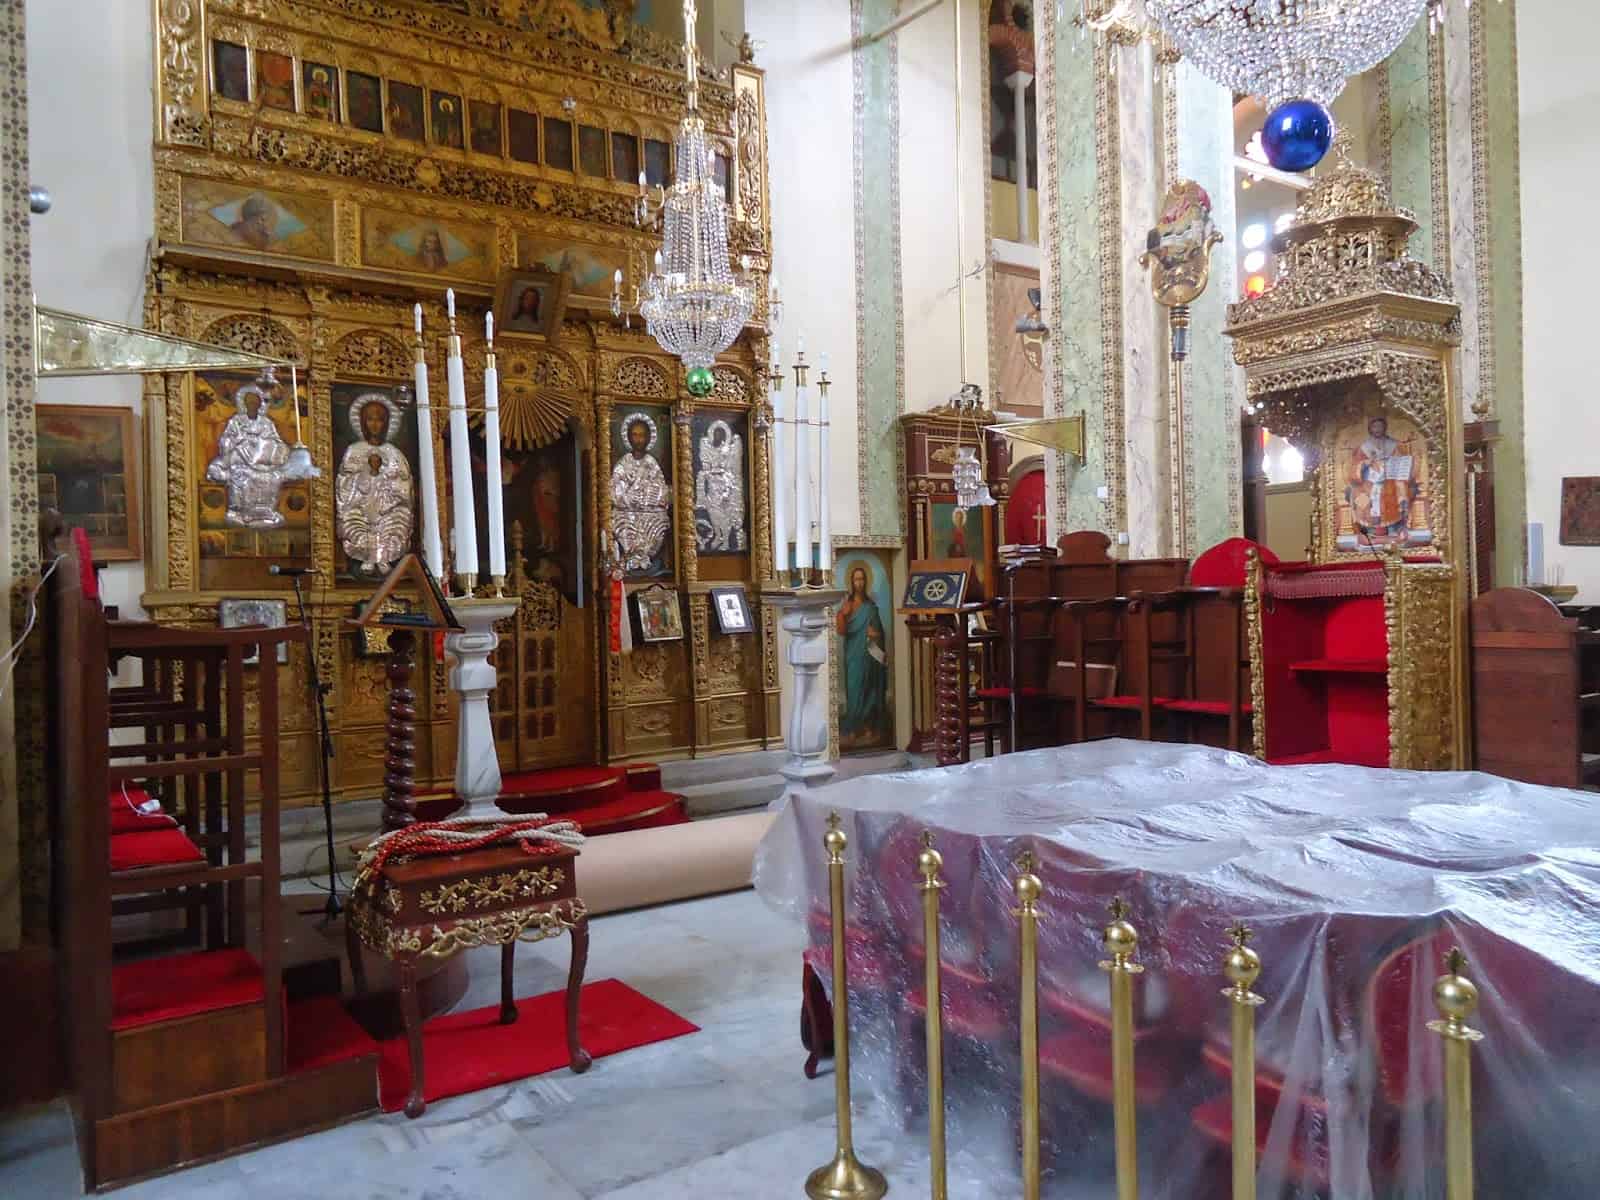 St. John Greek Orthodox Church on Burgazada, Princes' Islands, Istanbul, Turkey